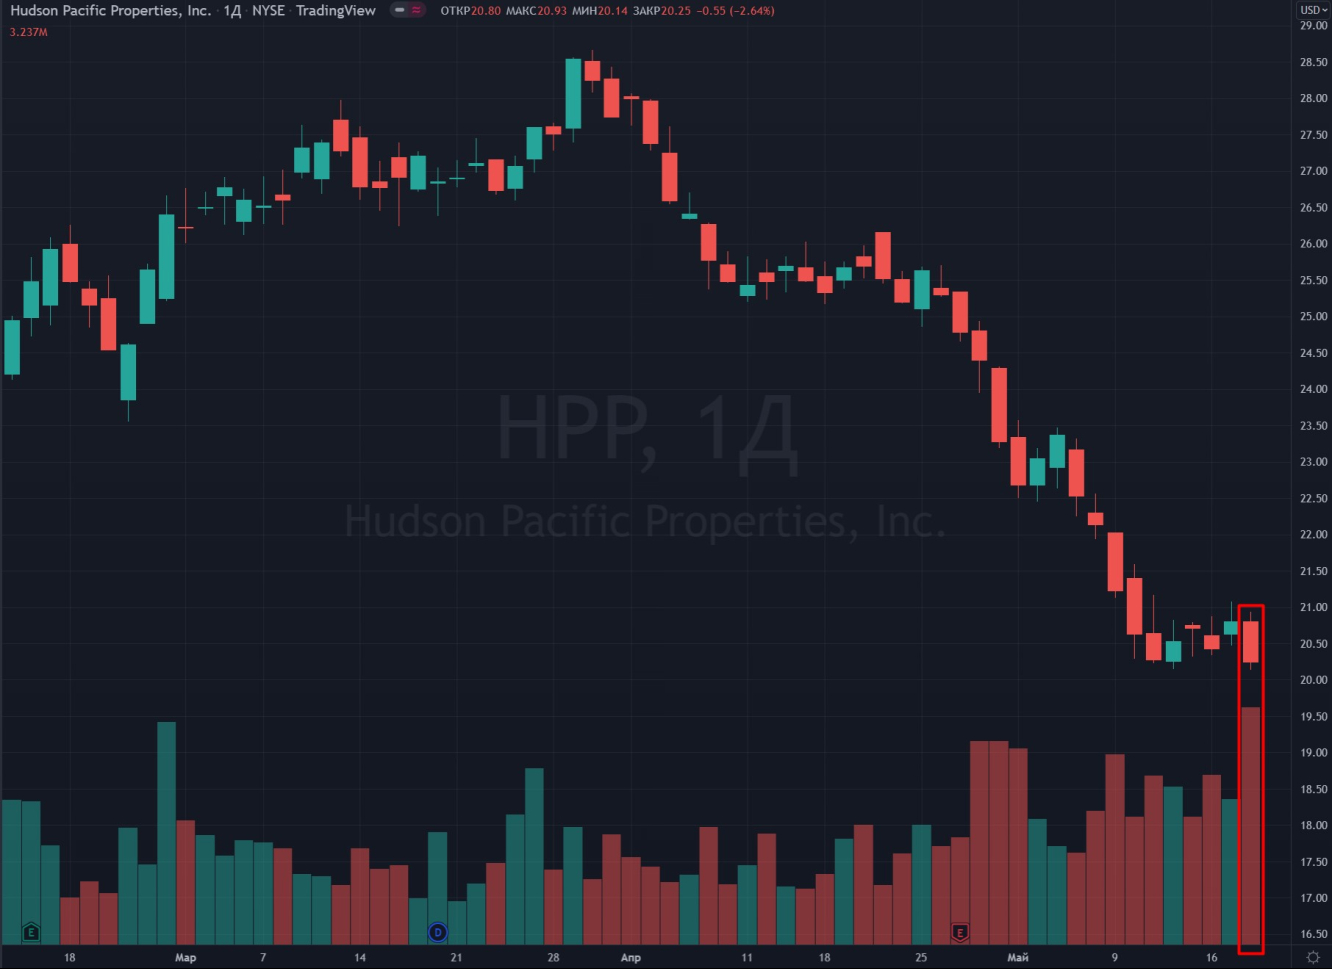 Hudson Pacific Properties (HPP)